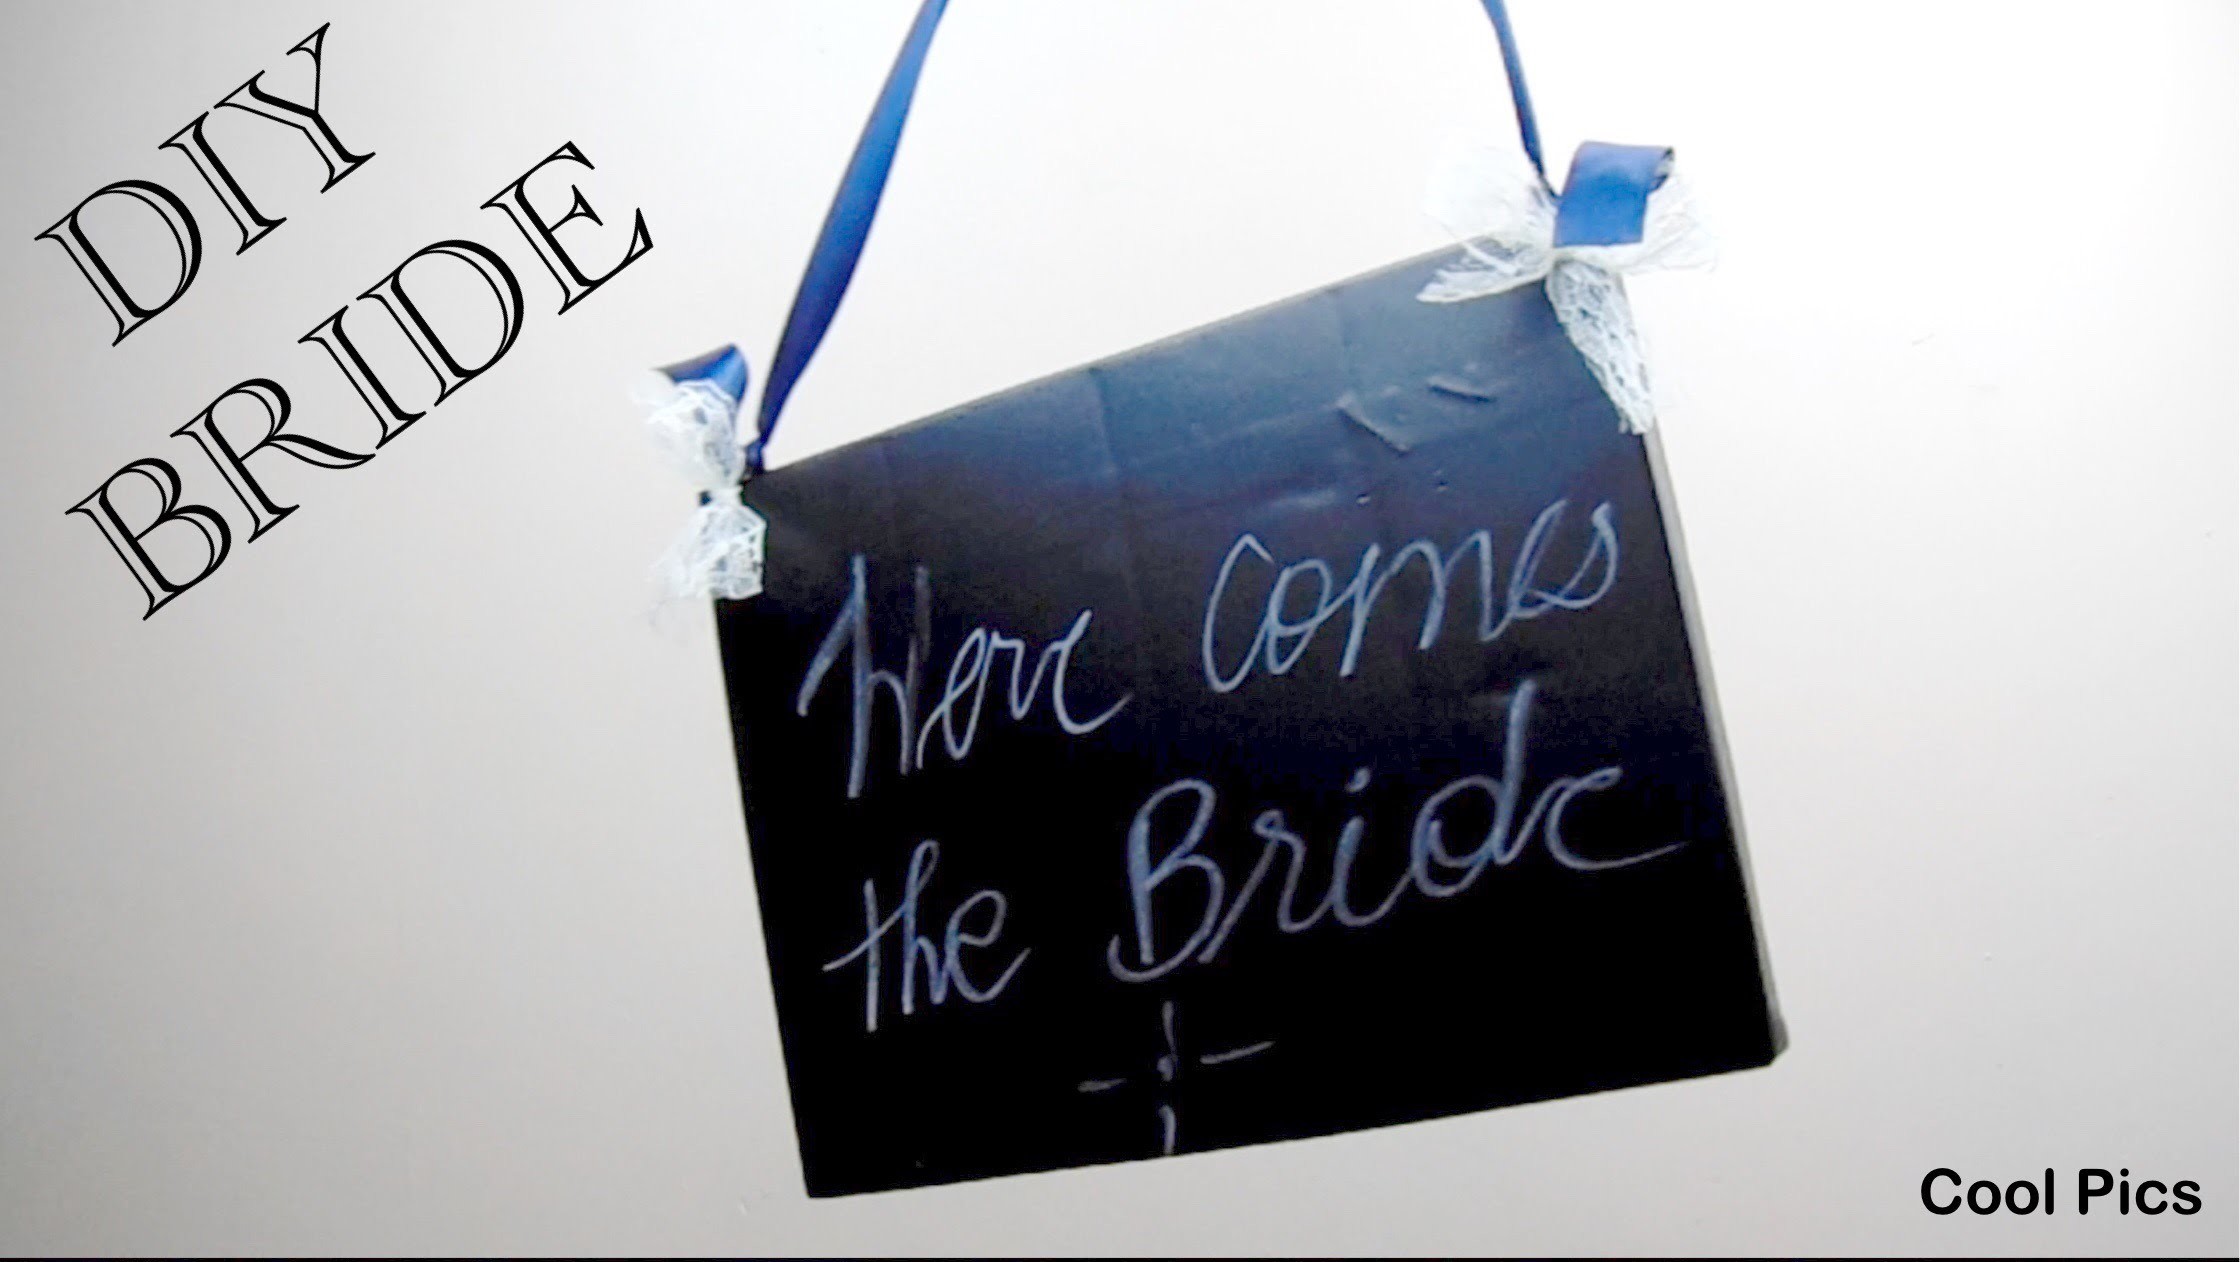 DIY Bride 1: Chalkboard "Here comes the Bride" sign